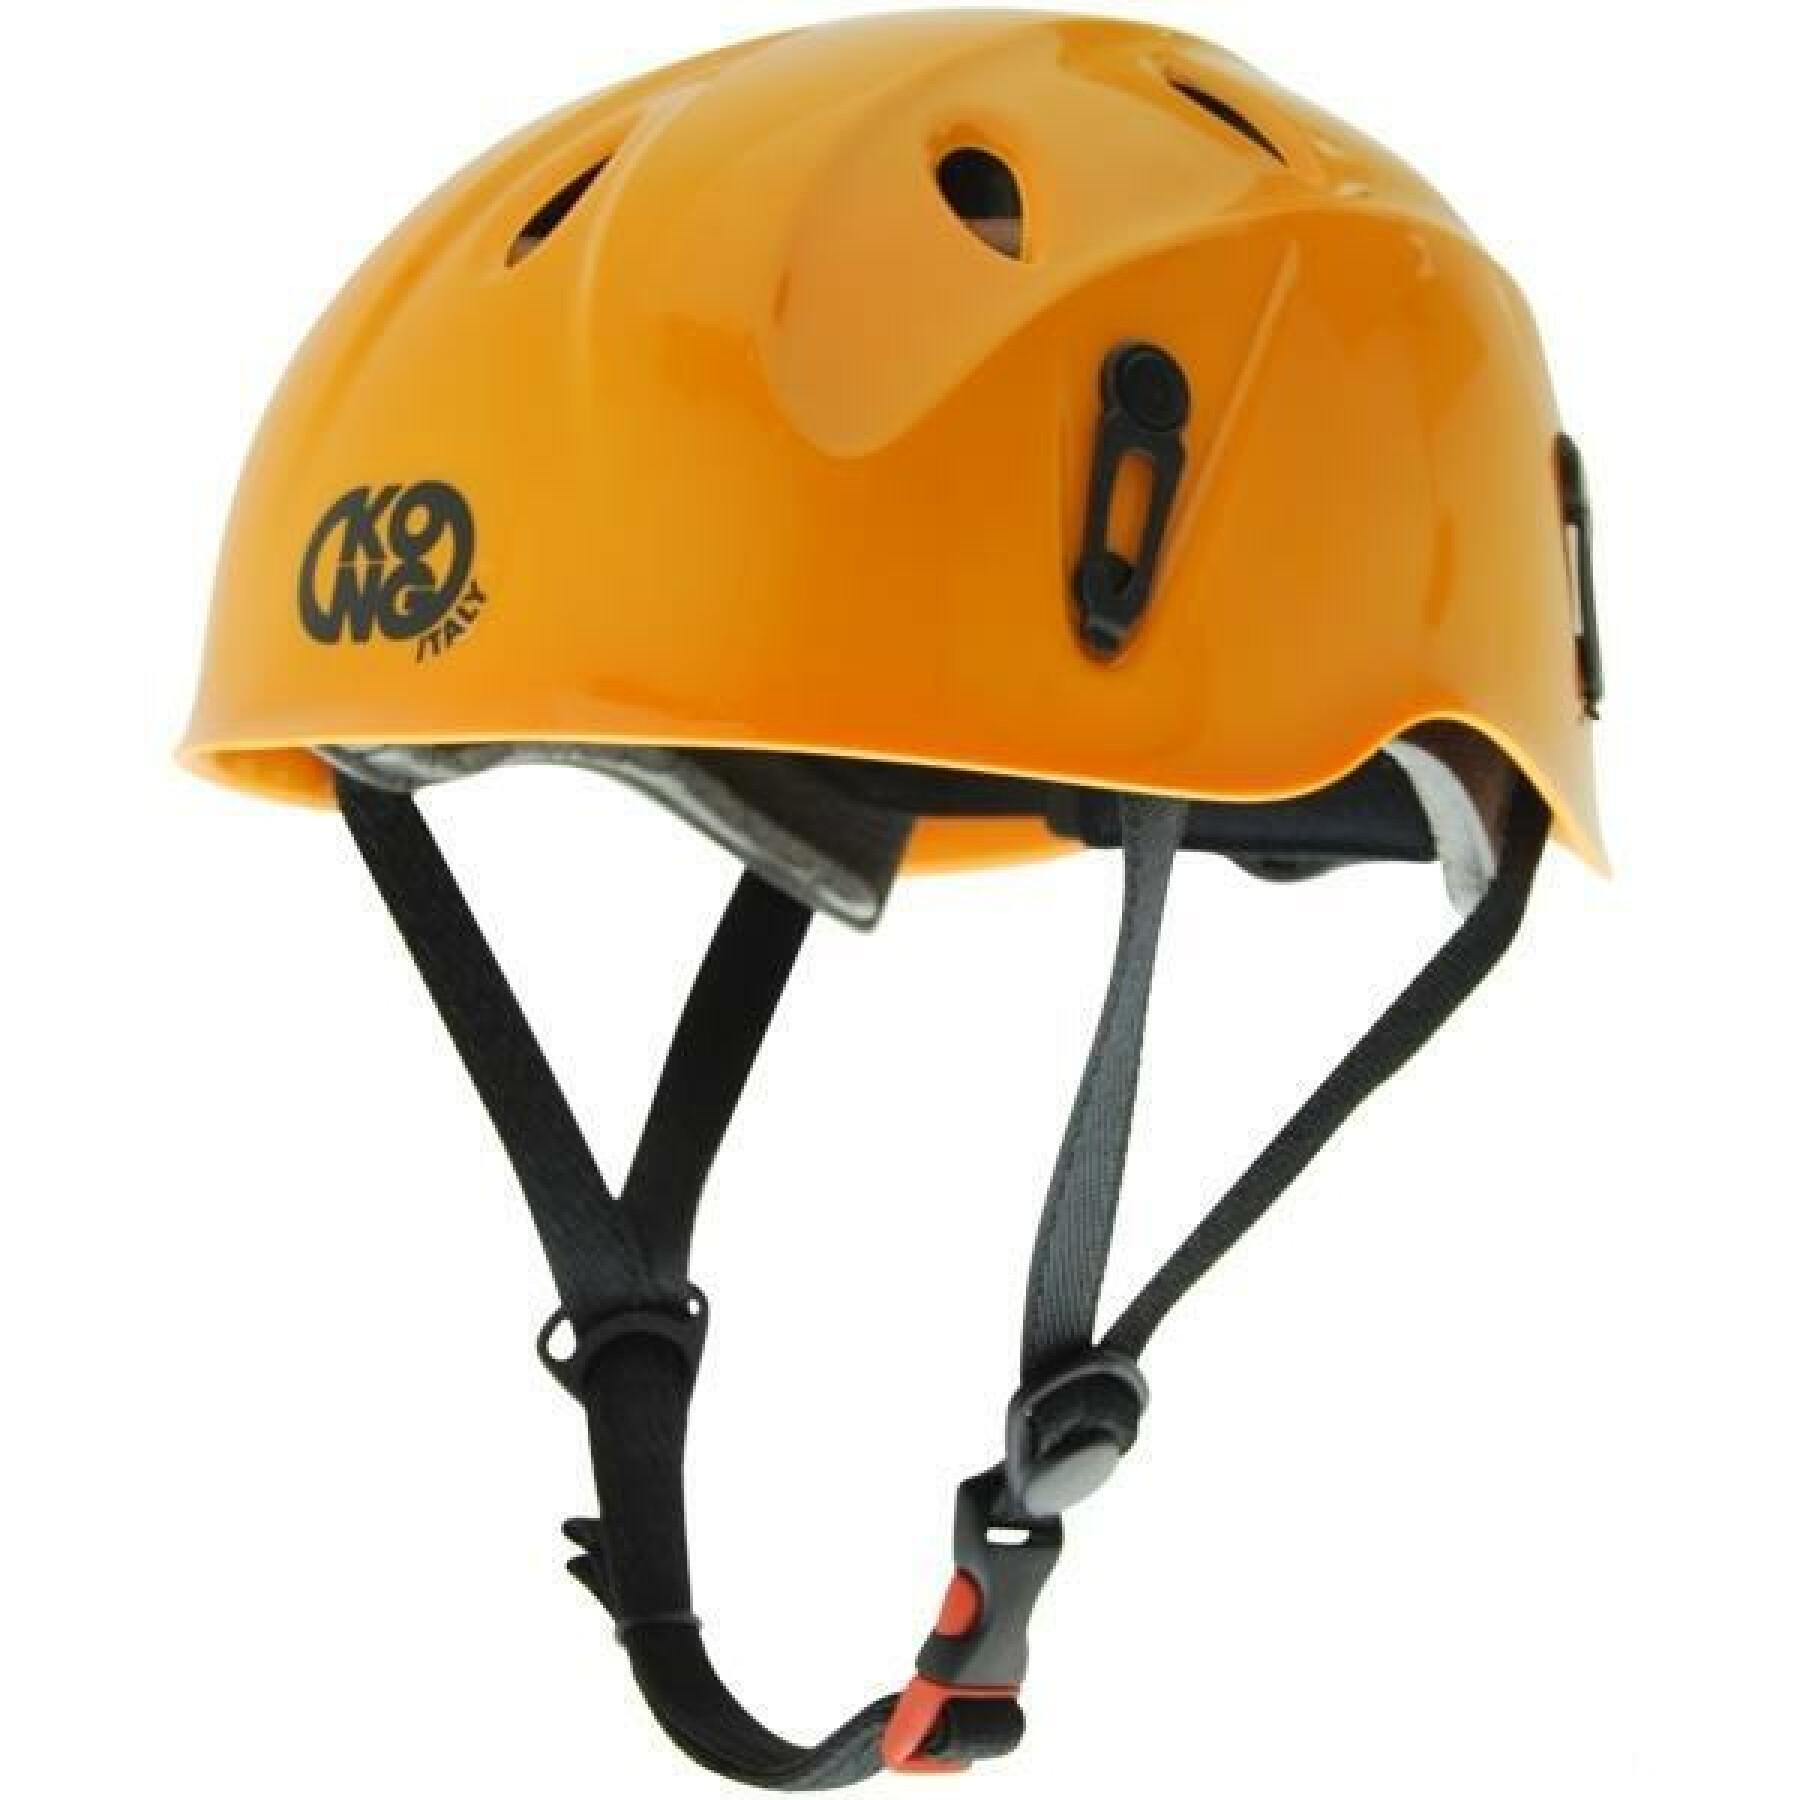 Climbing helmet for children Kong Casco bimbo (pikkio) tg.uni arancione